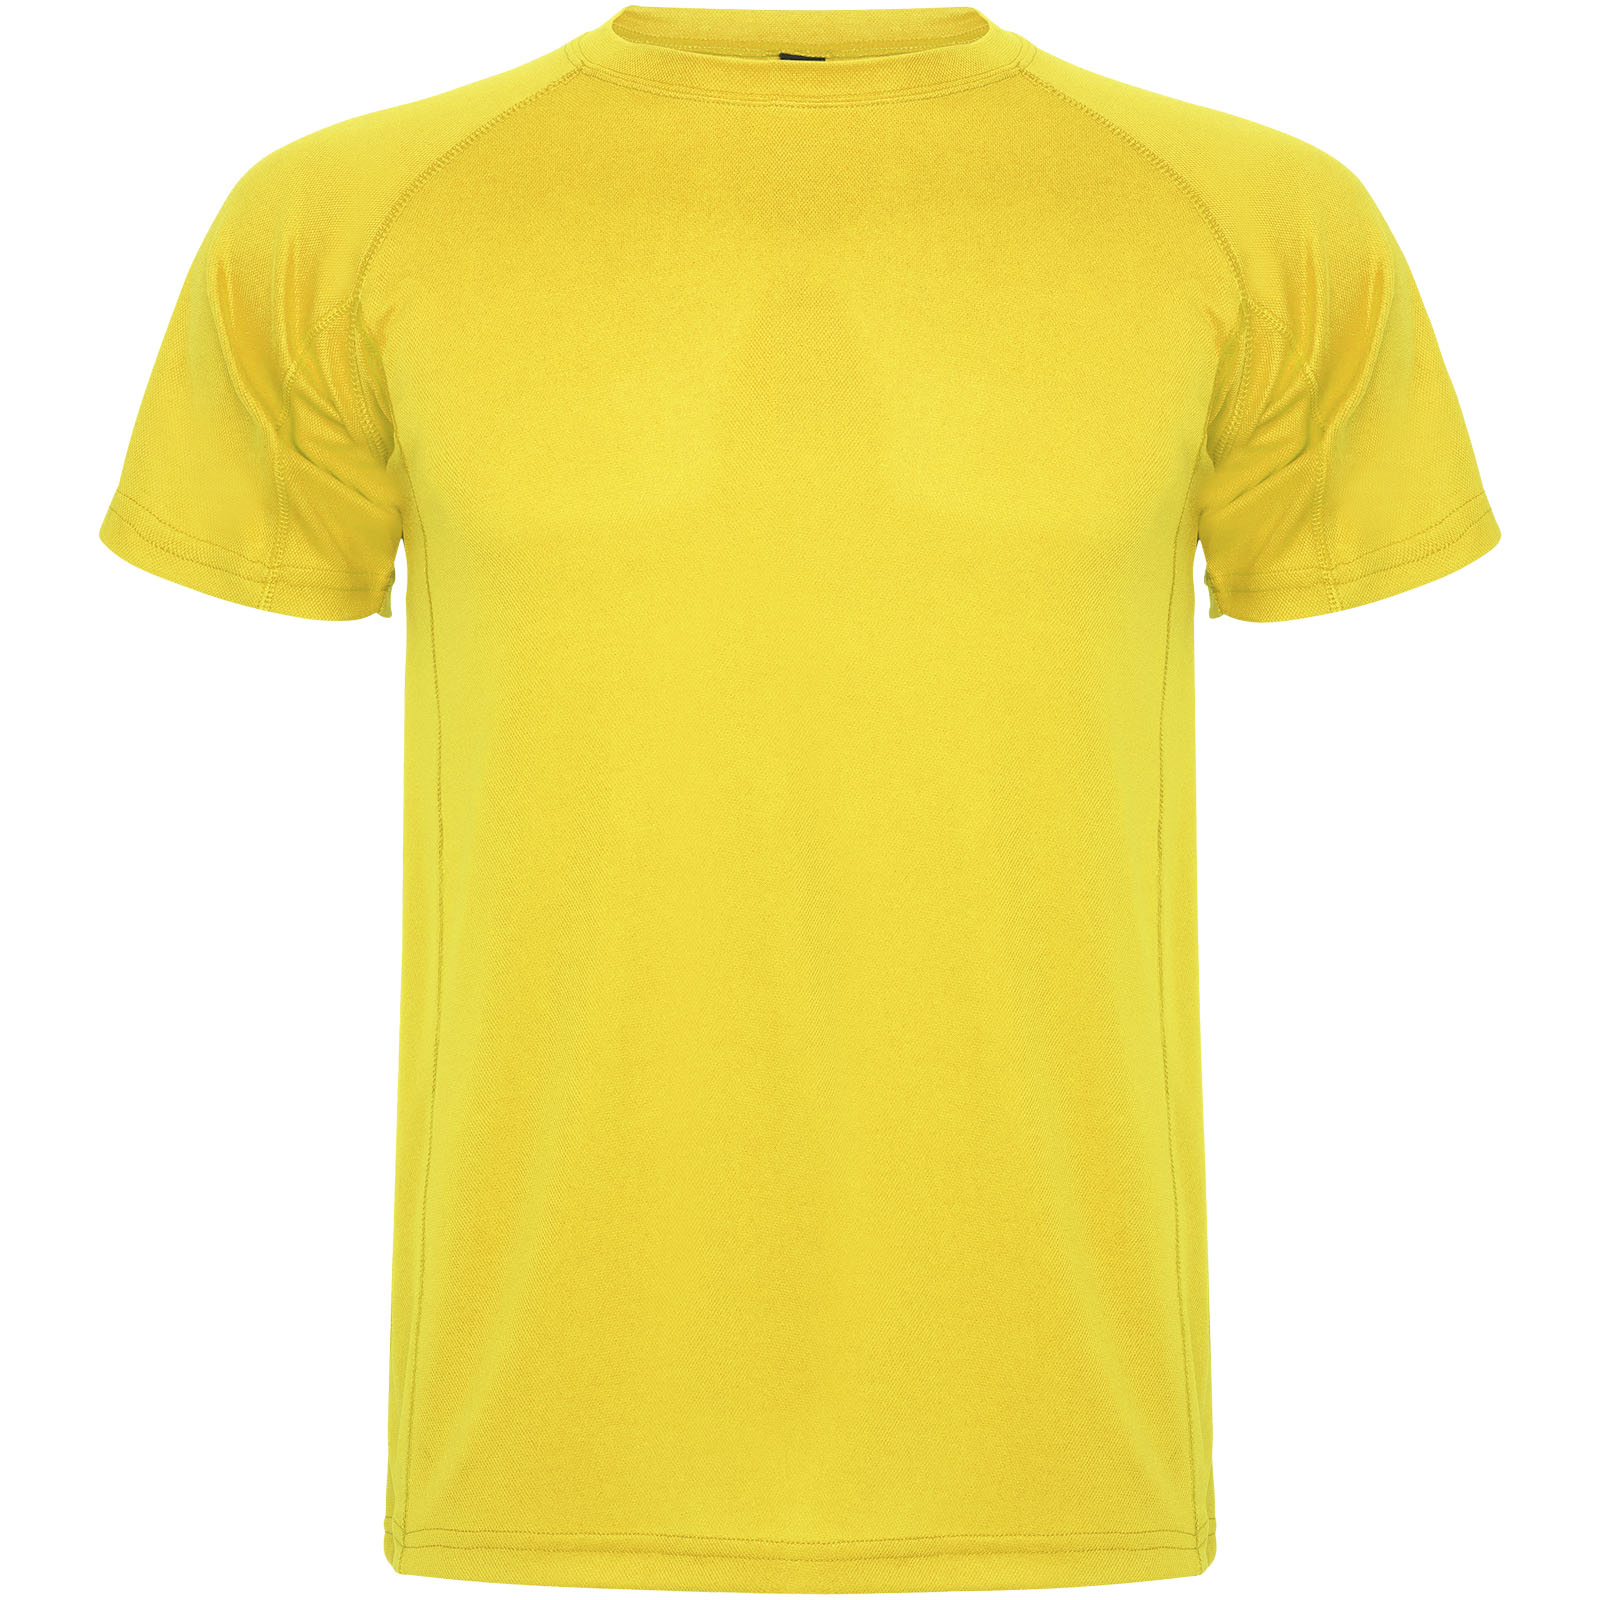 Advertising T-shirts - Montecarlo short sleeve men's sports t-shirt